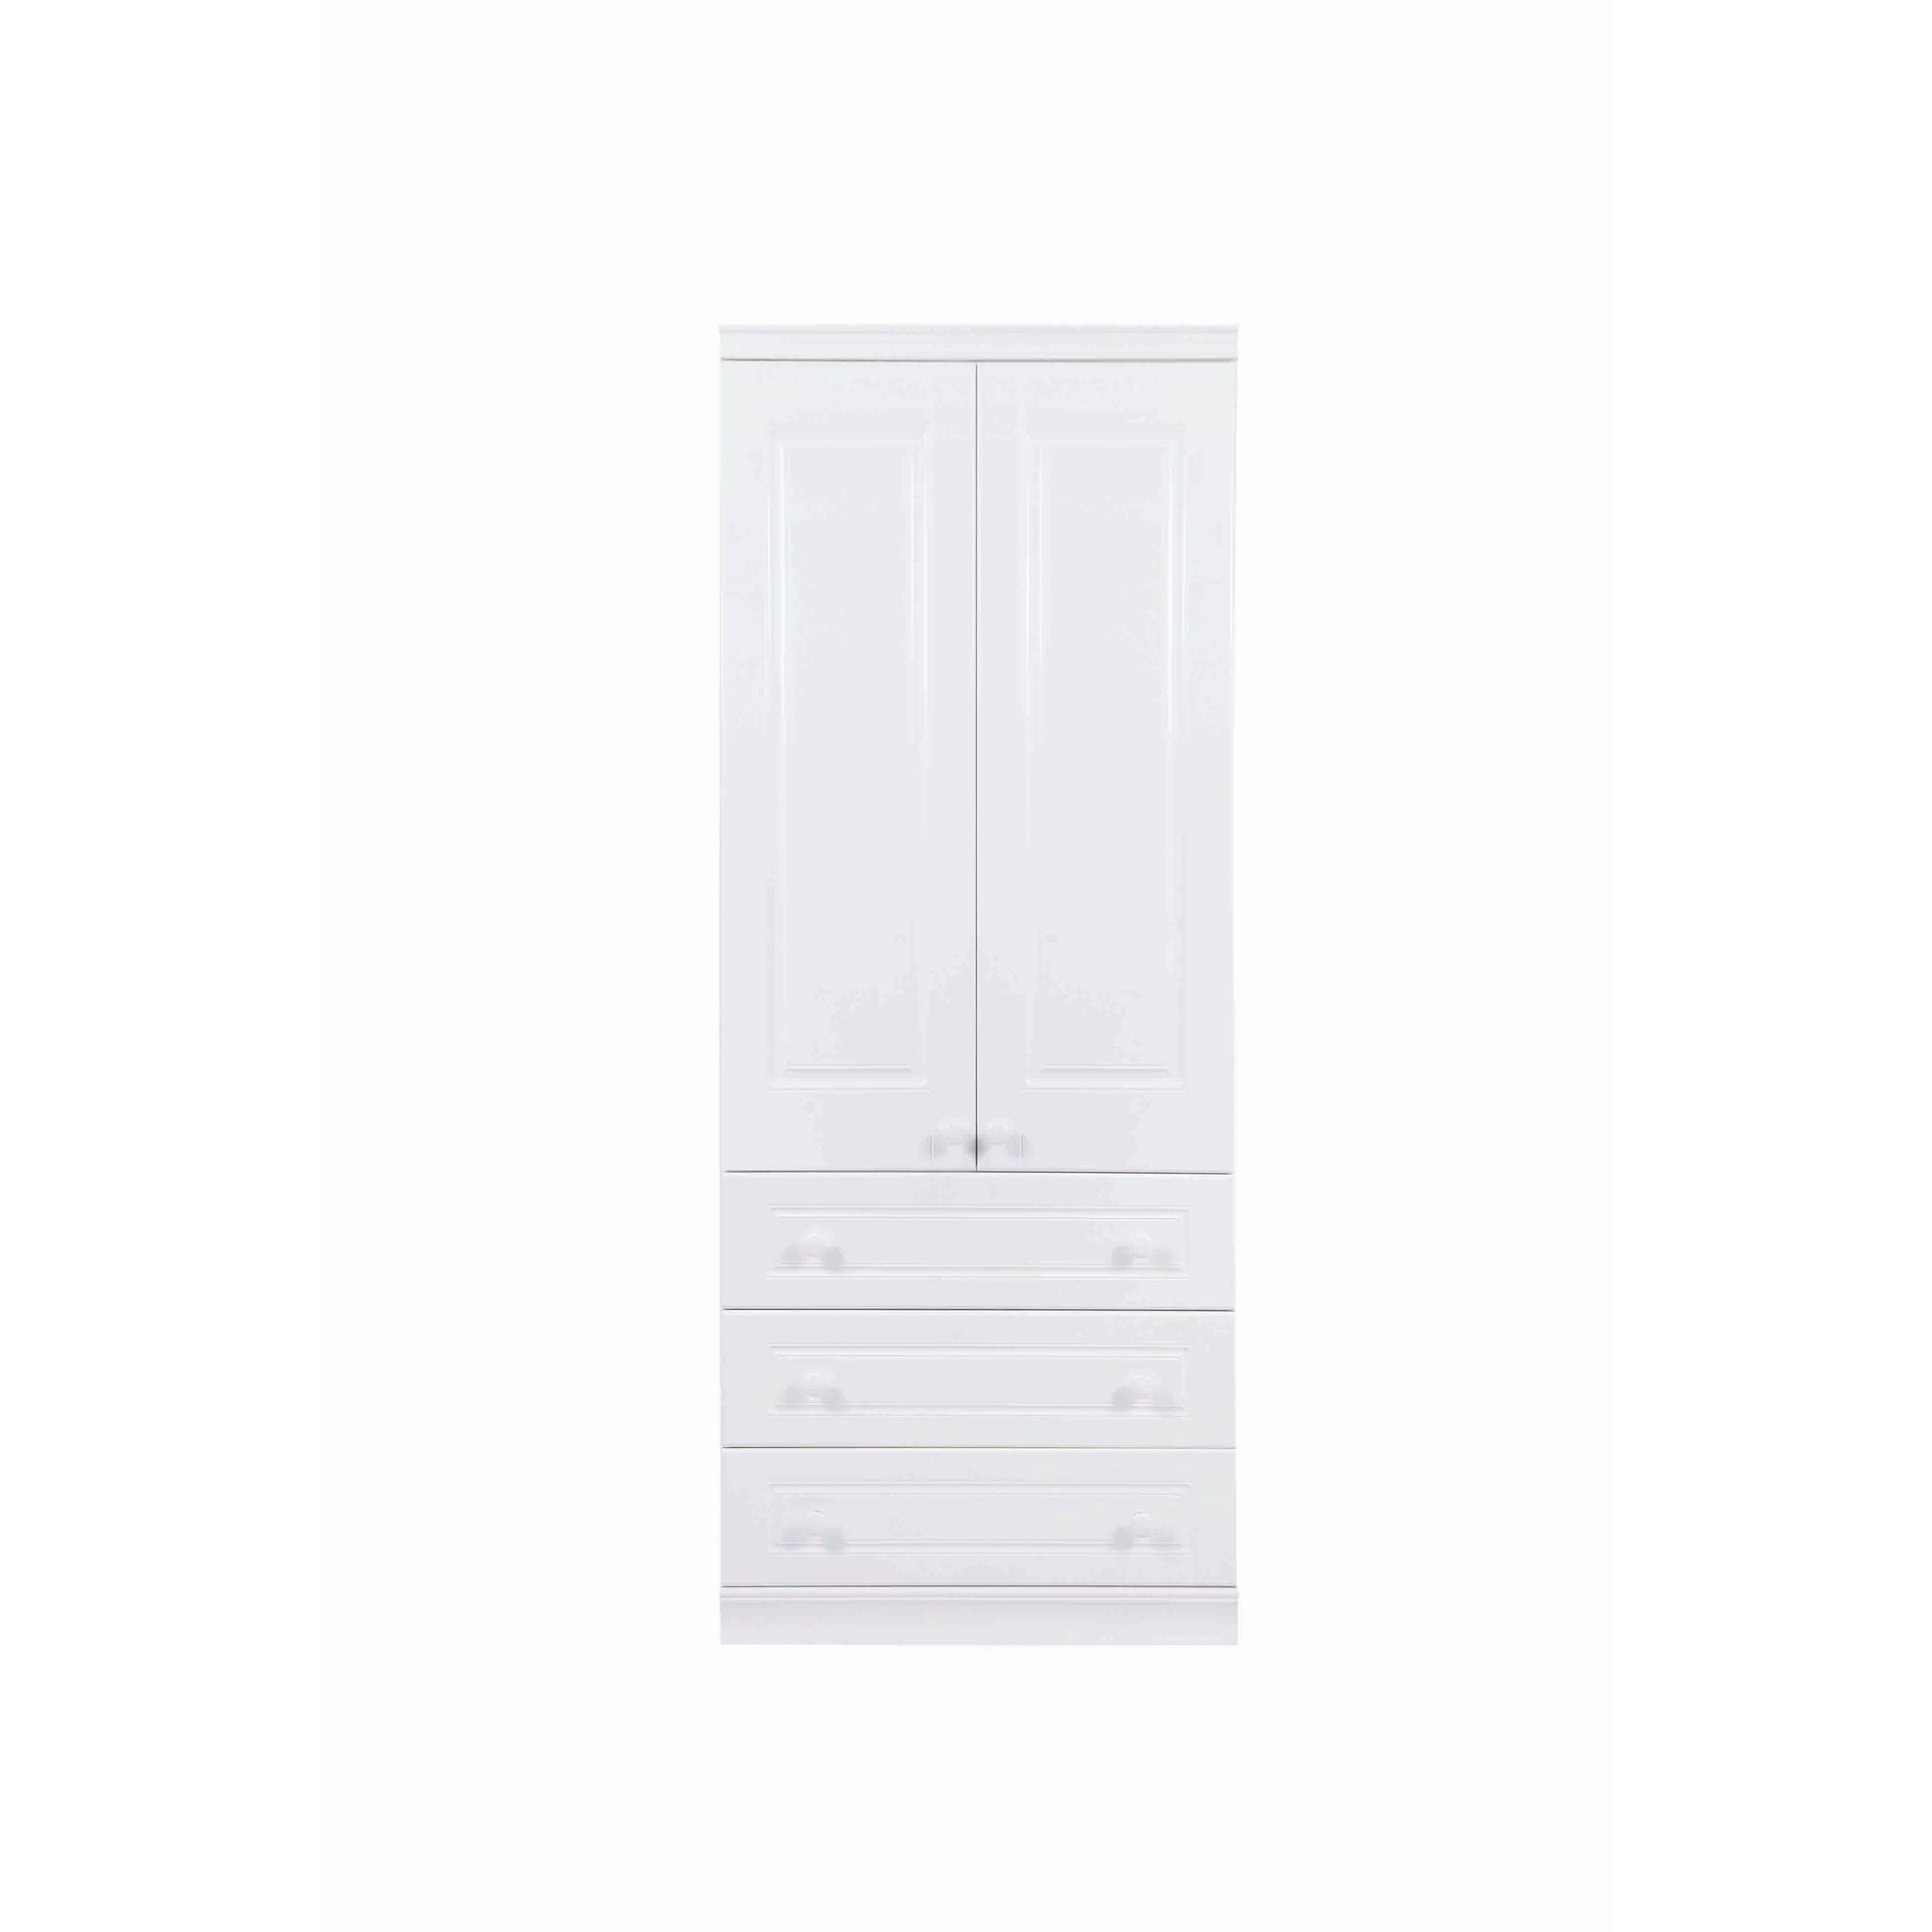 Caxton Henley 2 Door / 3 Drawer Combination Wardrobe in White at Tesco Direct